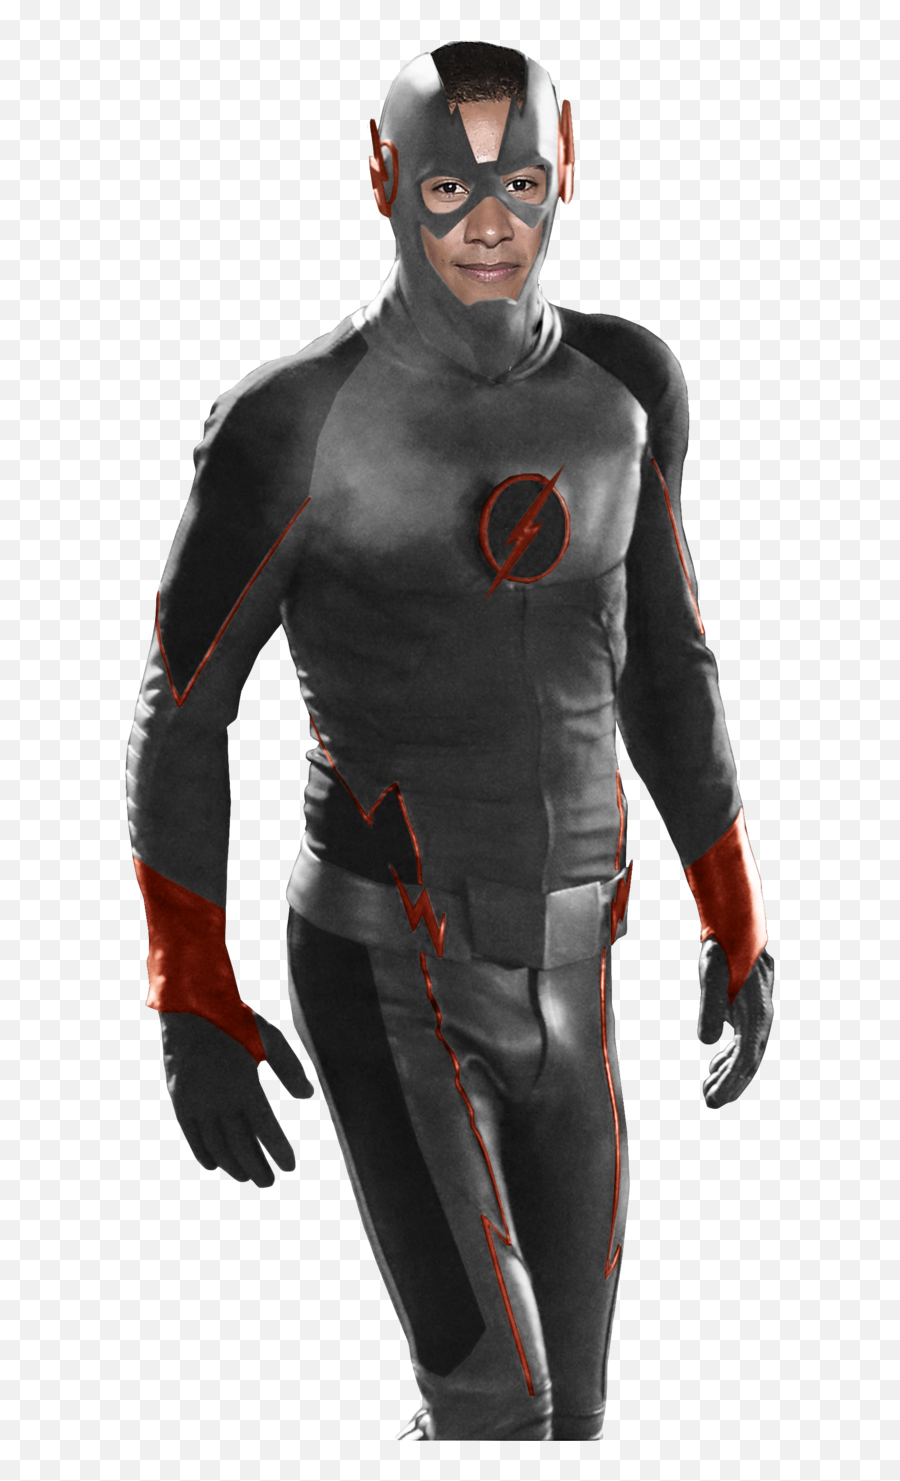 Download Flash Man Png Image For Free - Flash Bart Allen Cw Suit,Flash Superhero Icon